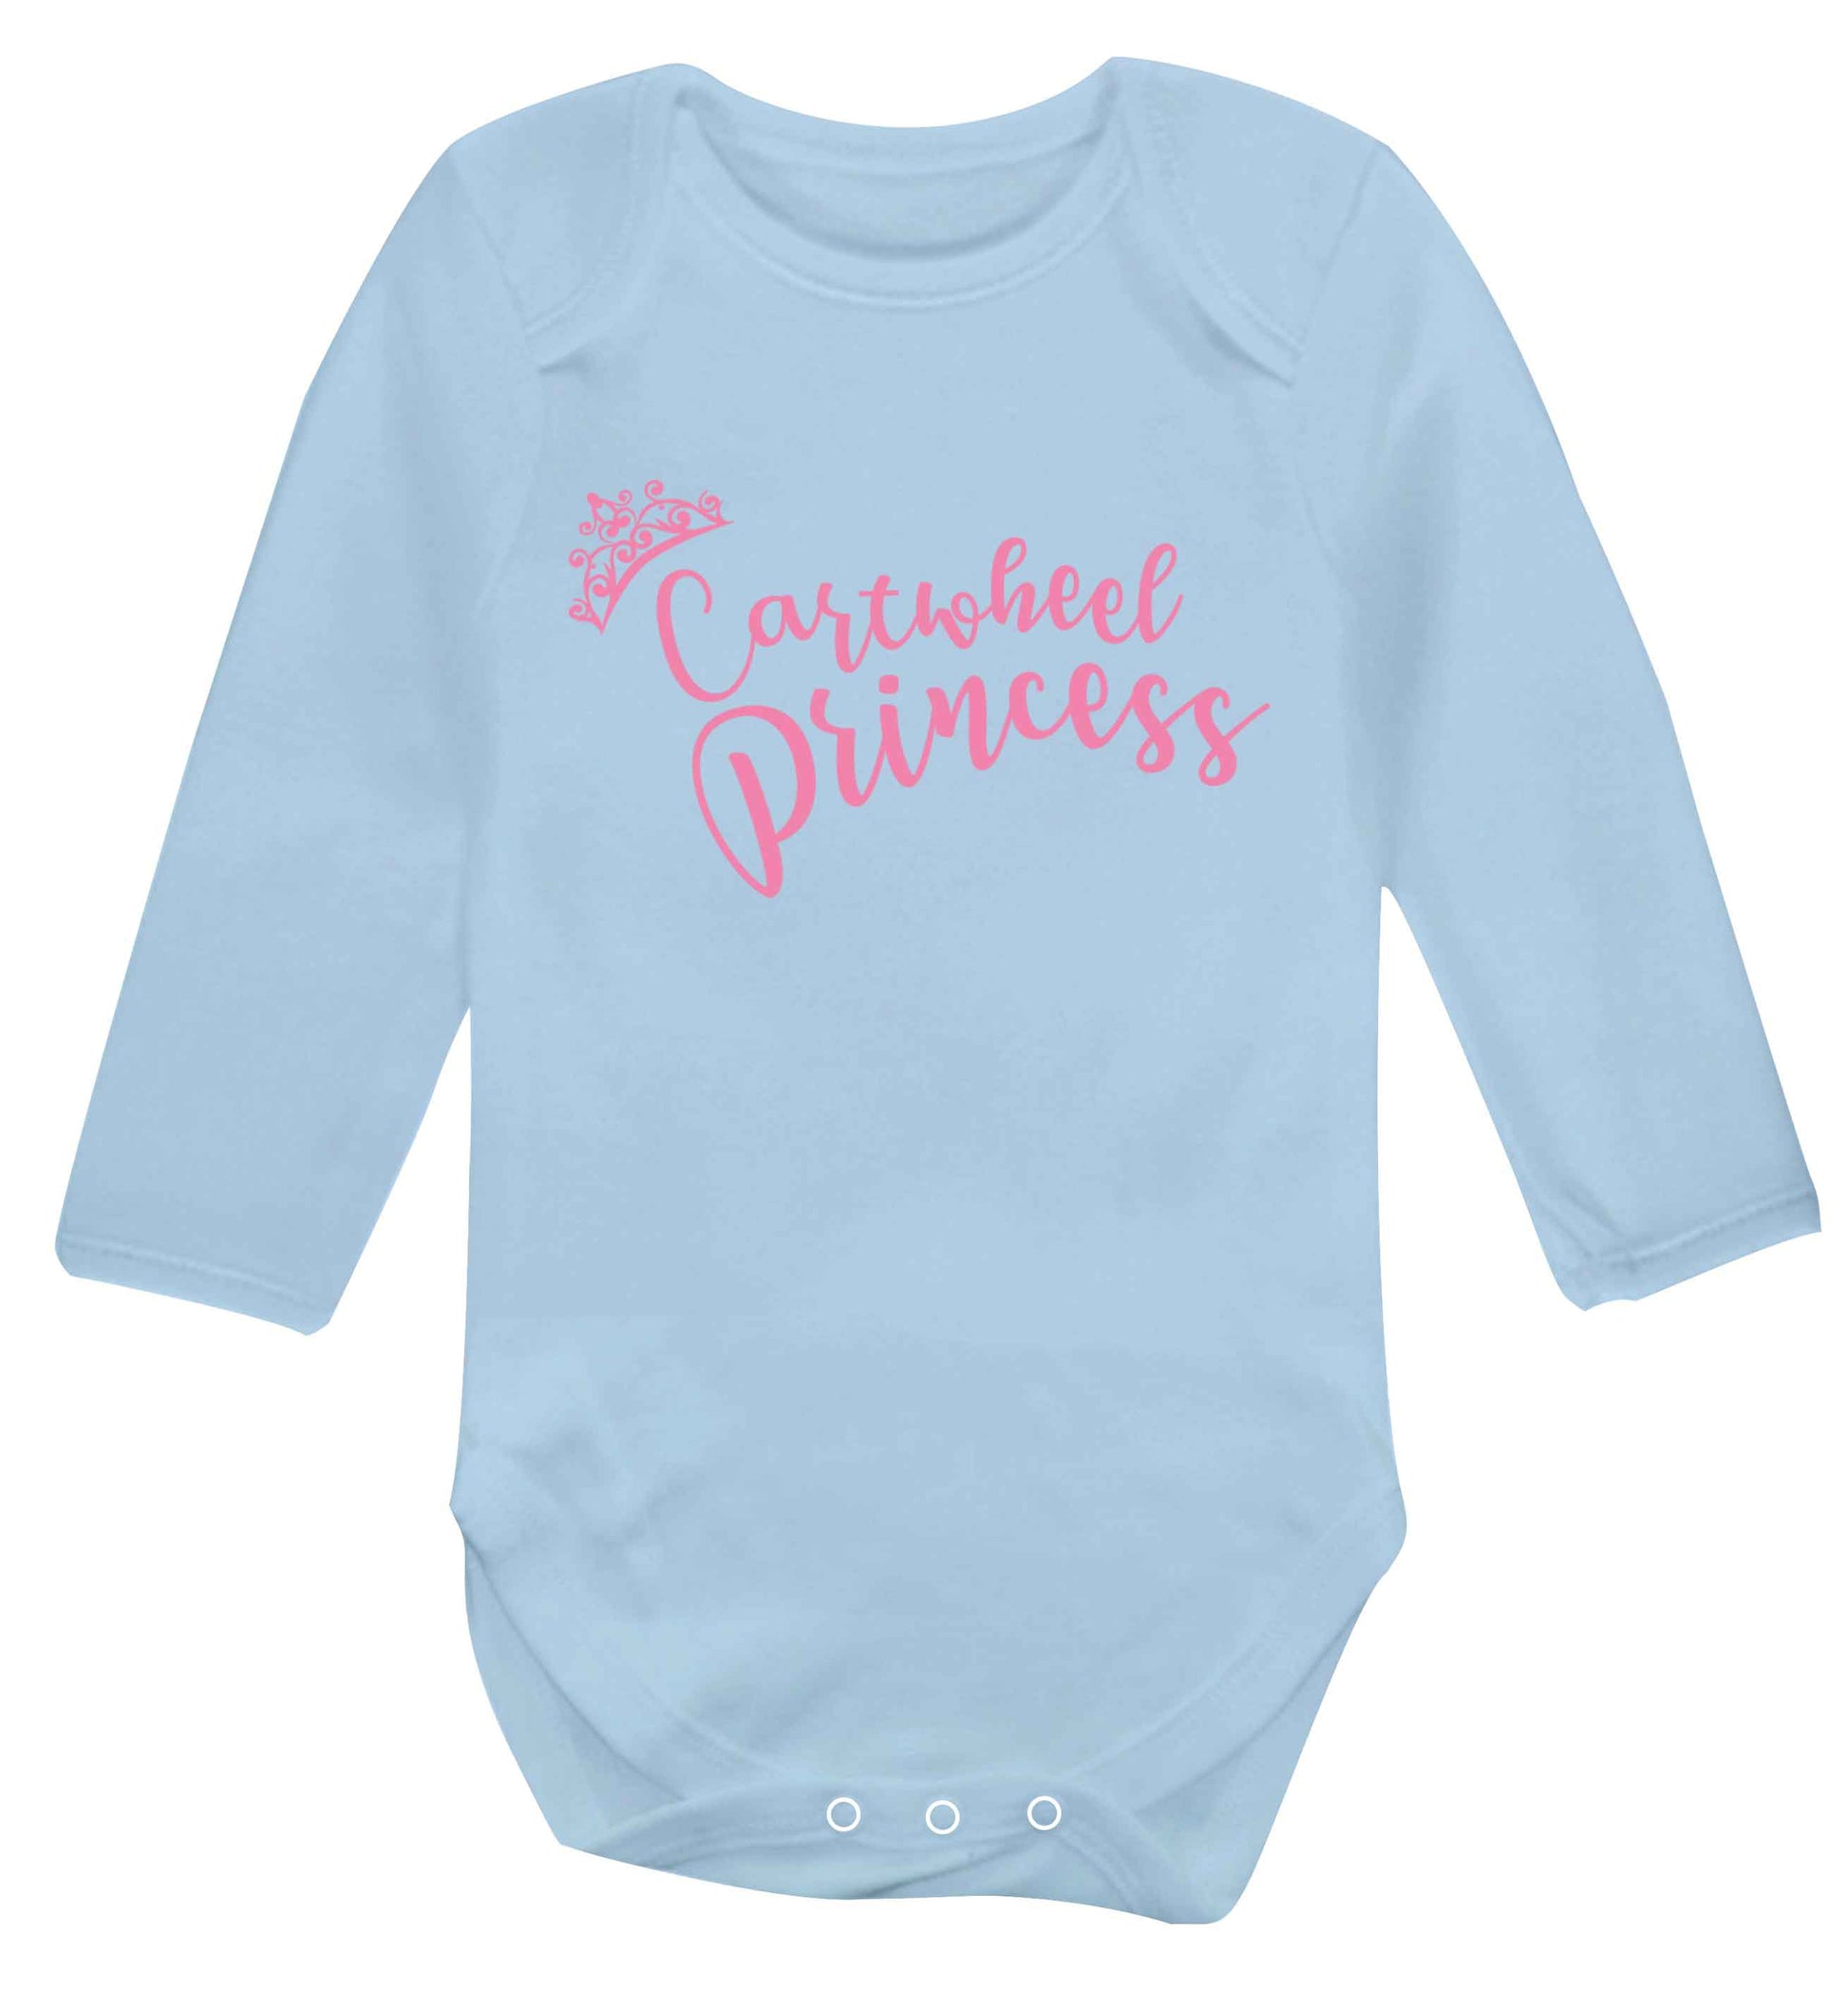 Cartwheel princess Baby Vest long sleeved pale blue 6-12 months